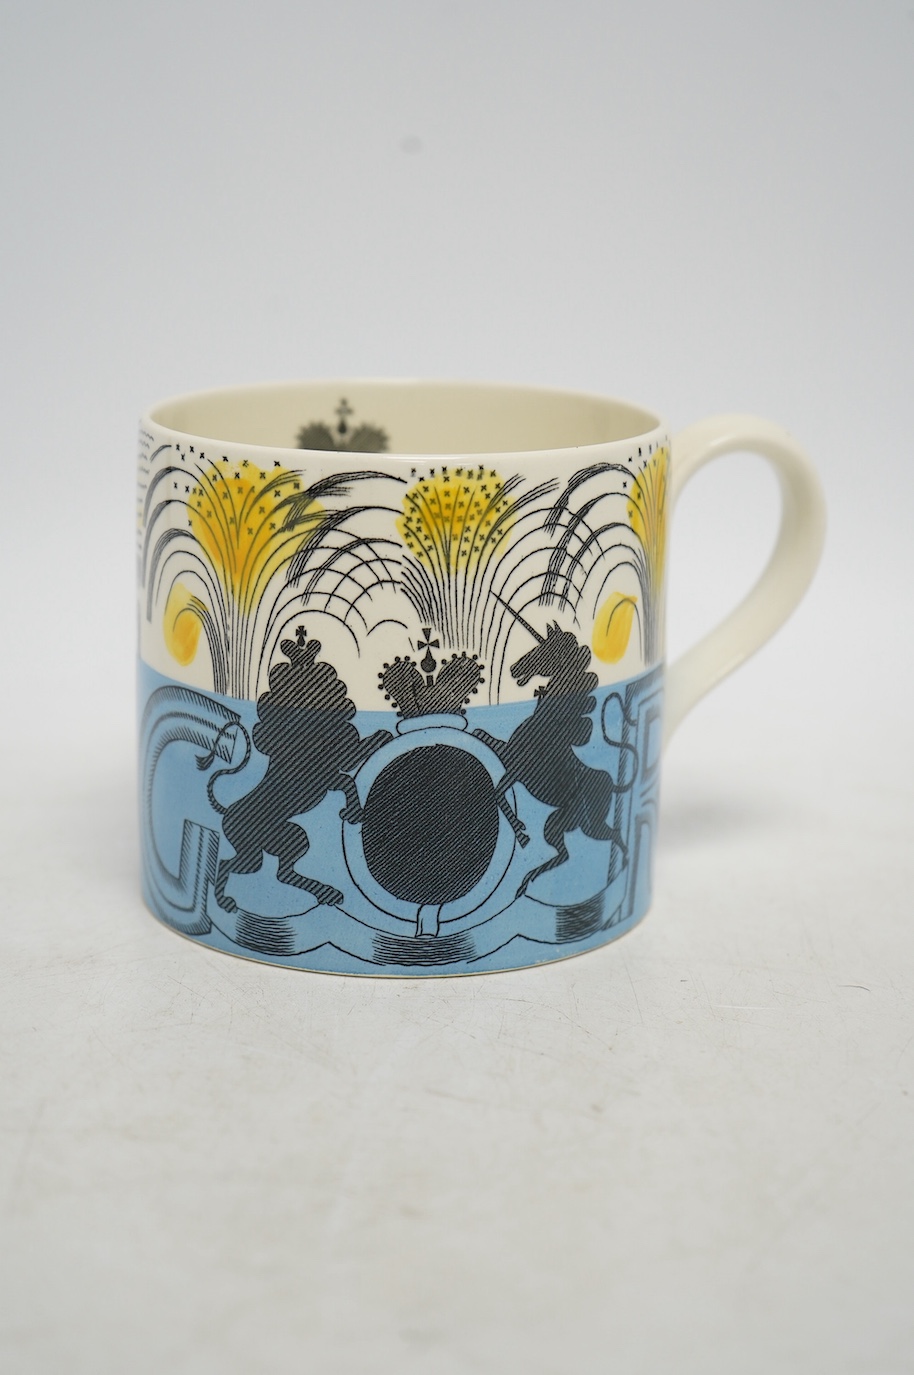 Eric Ravilious for Wedgwood, a commemorative mug, 1937 coronation of George VI, 10cm high. Condition - good